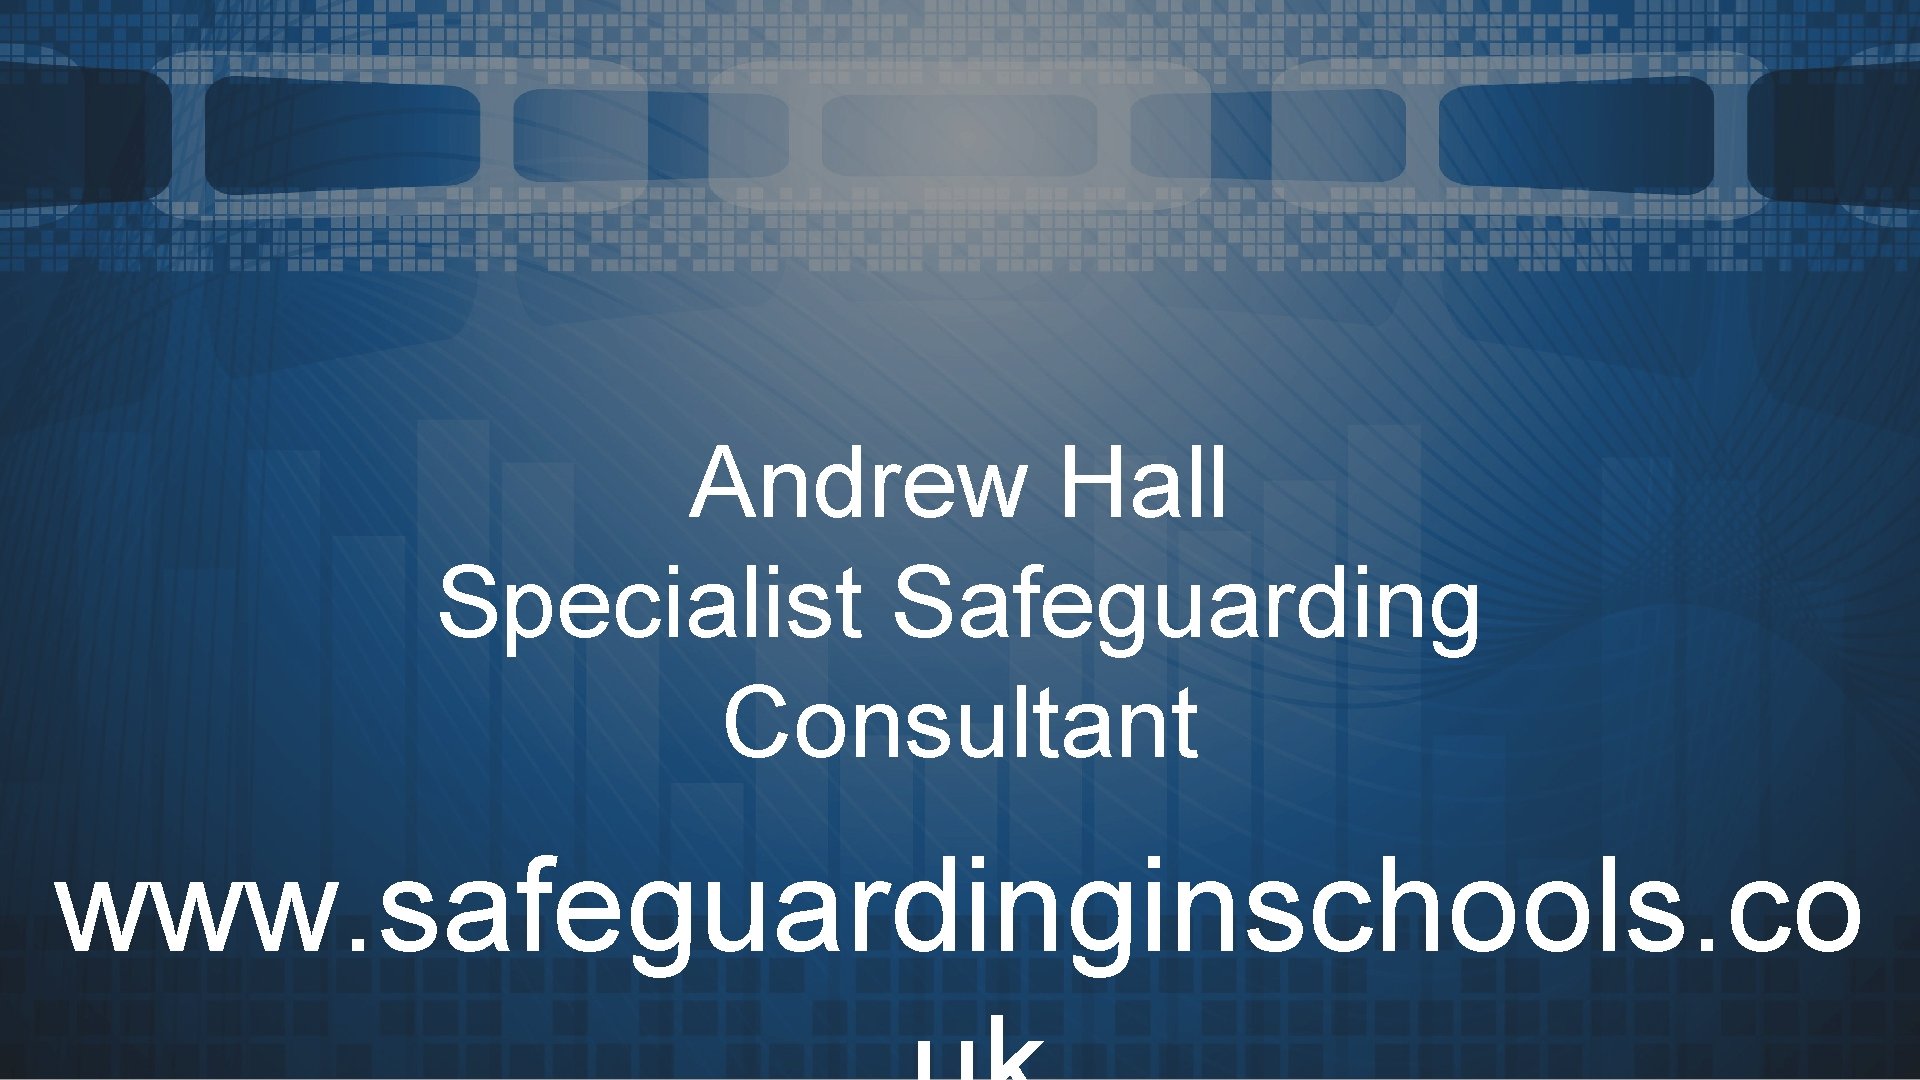 Andrew Hall Specialist Safeguarding Consultant www. safeguardinginschools. co 